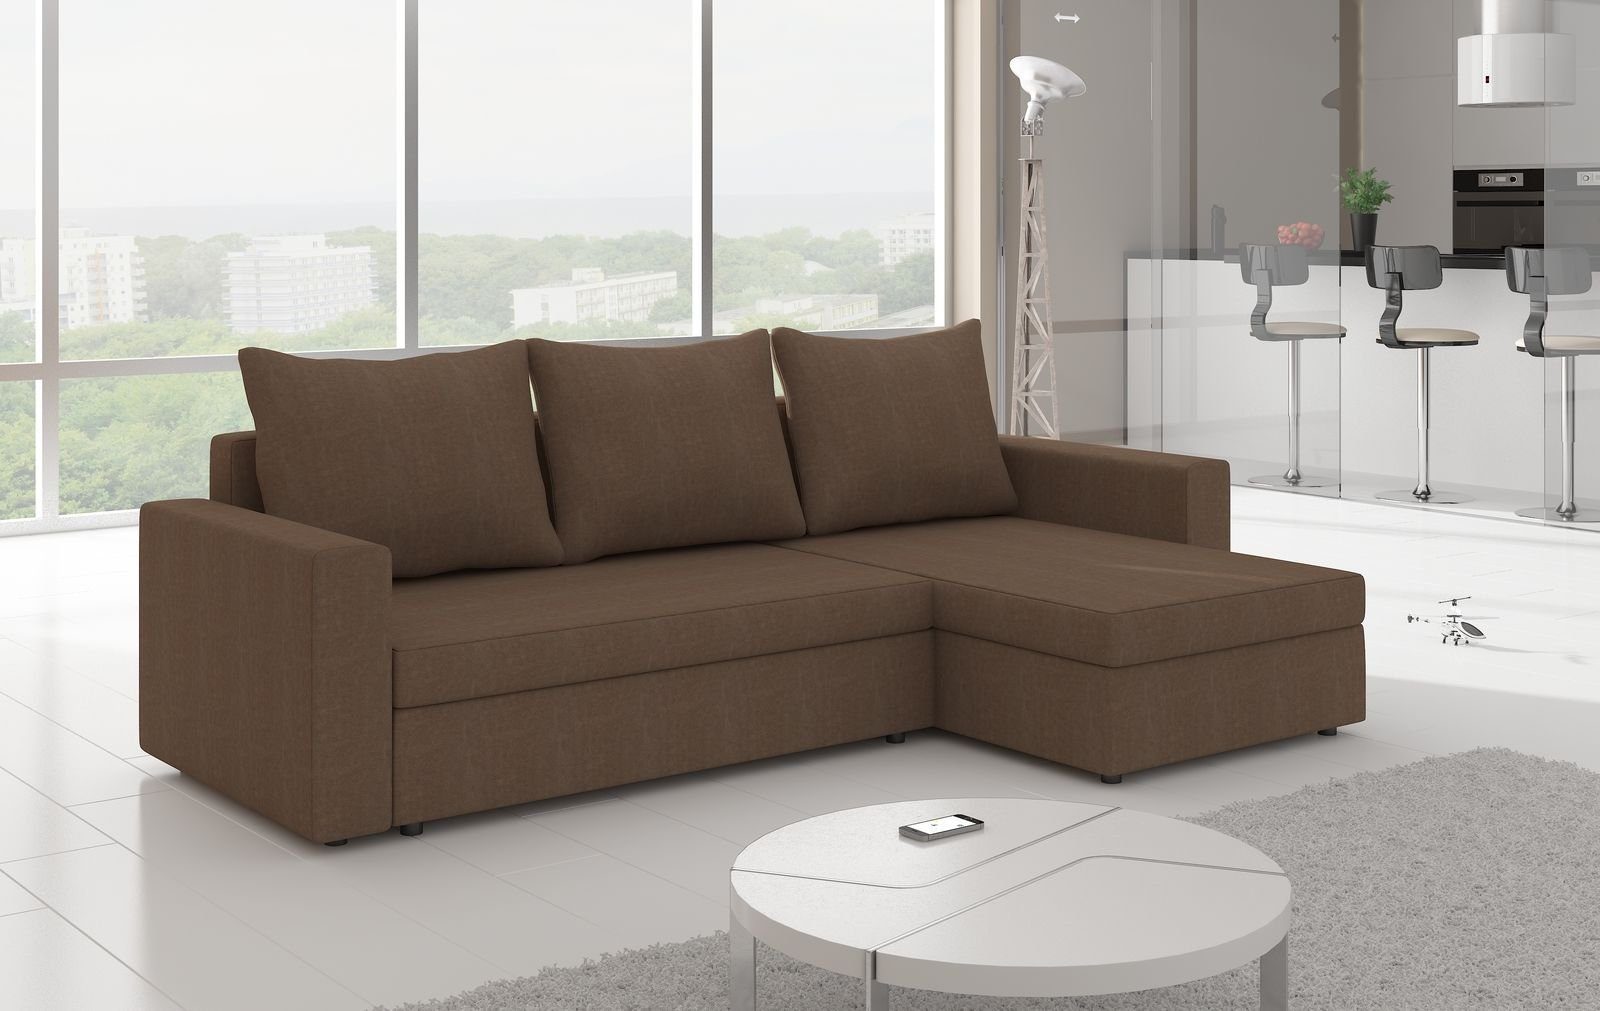 JVmoebel Ecksofa, Design Ecksofa Schlafsofa Bettfunktion Couch Leder Polster